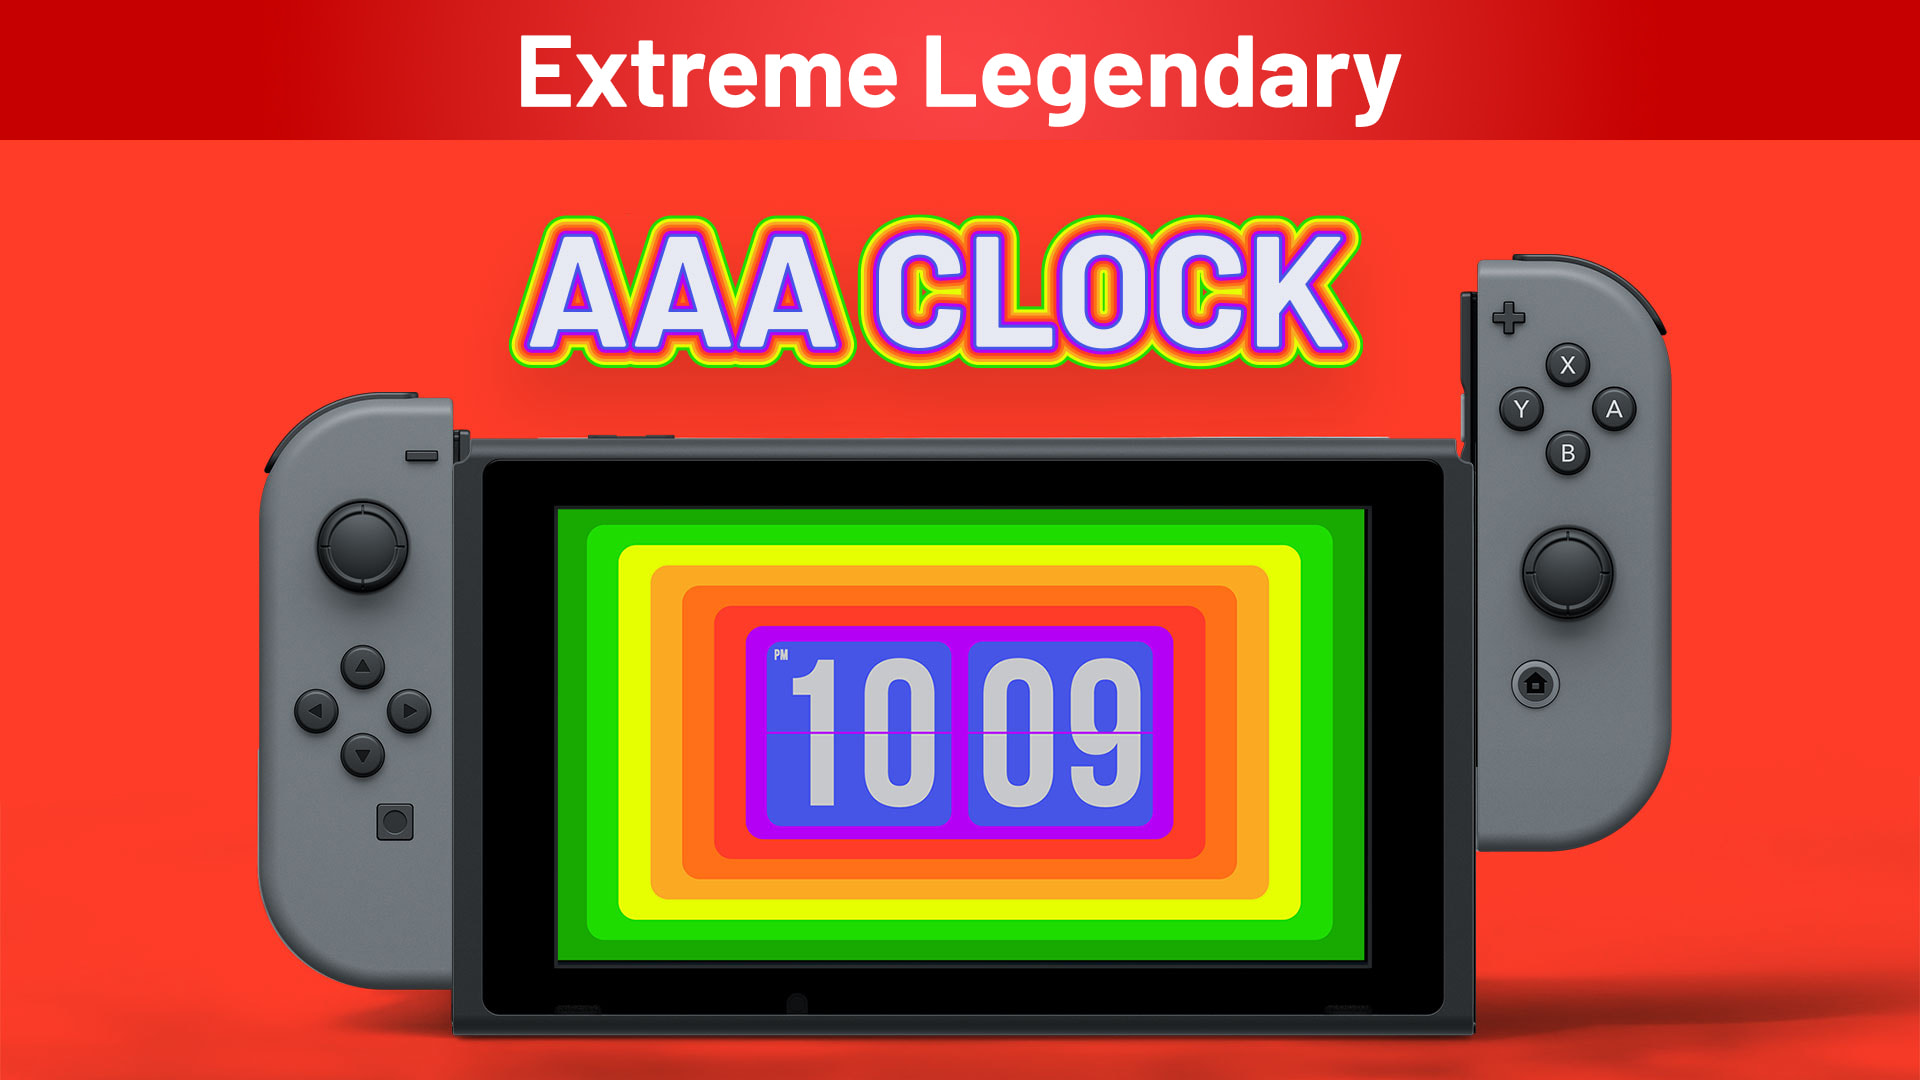 AAA Clock Extreme Legendary